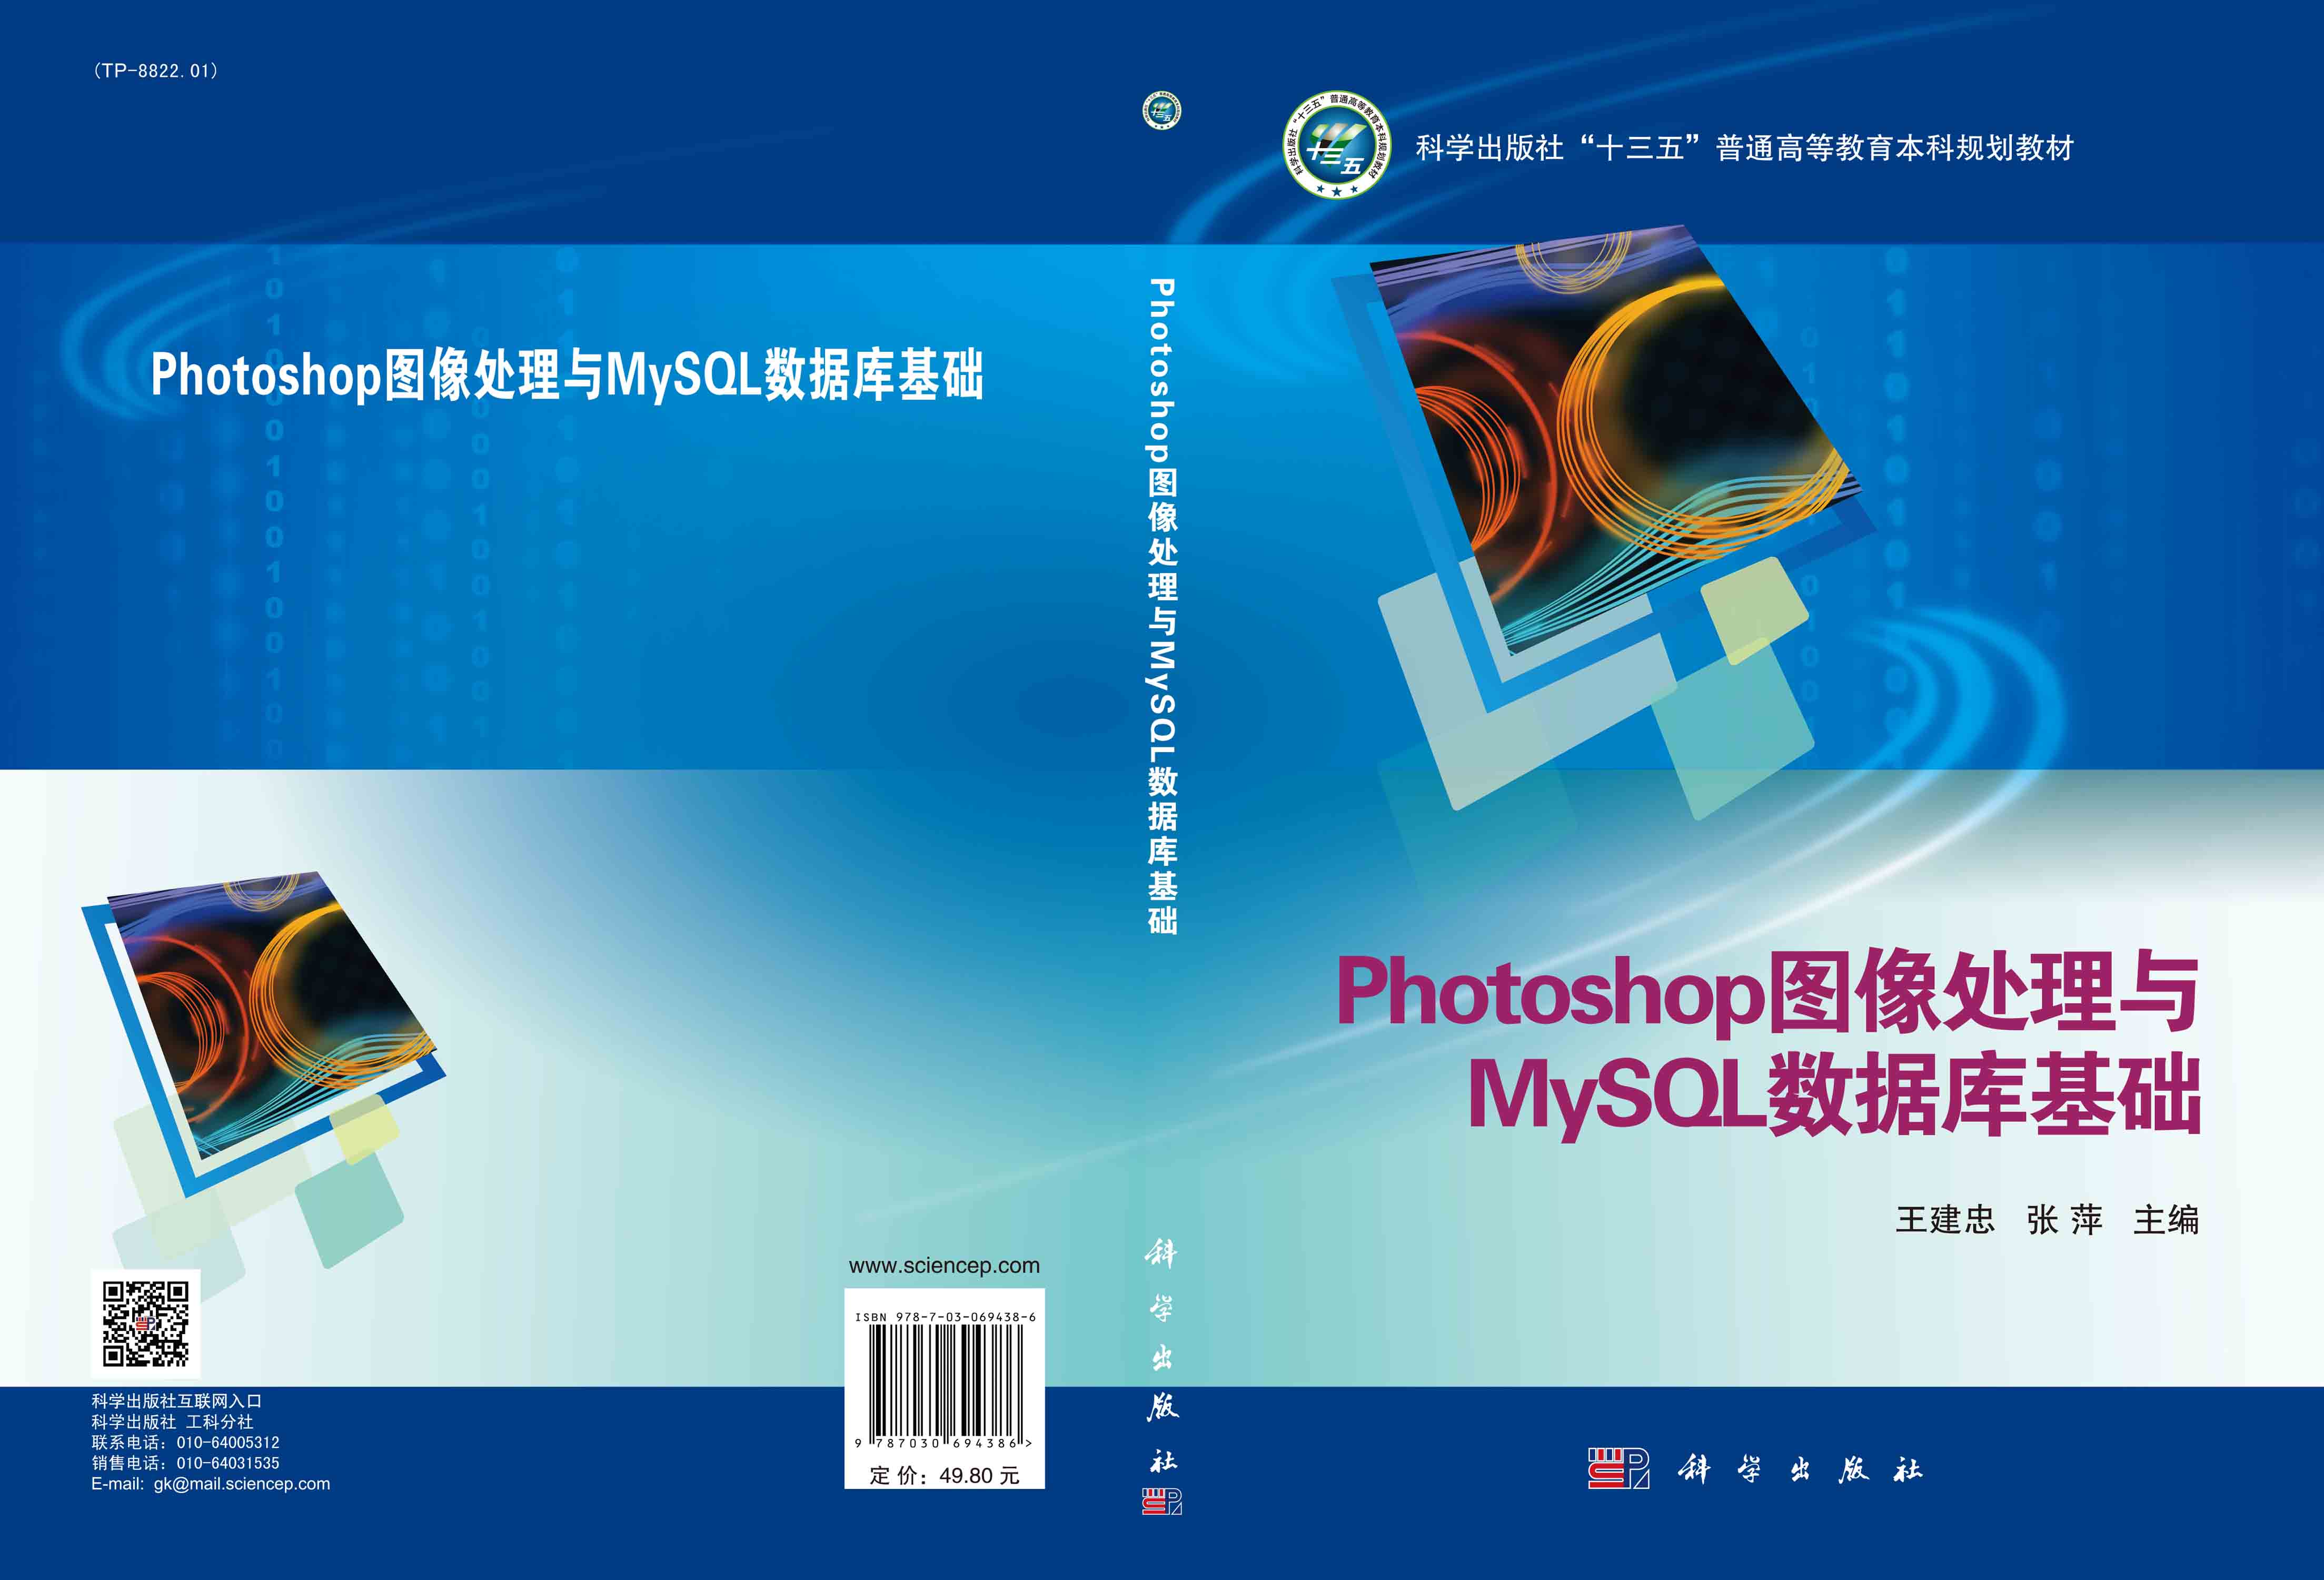 Photoshop图像处理与MySQL数据库基础